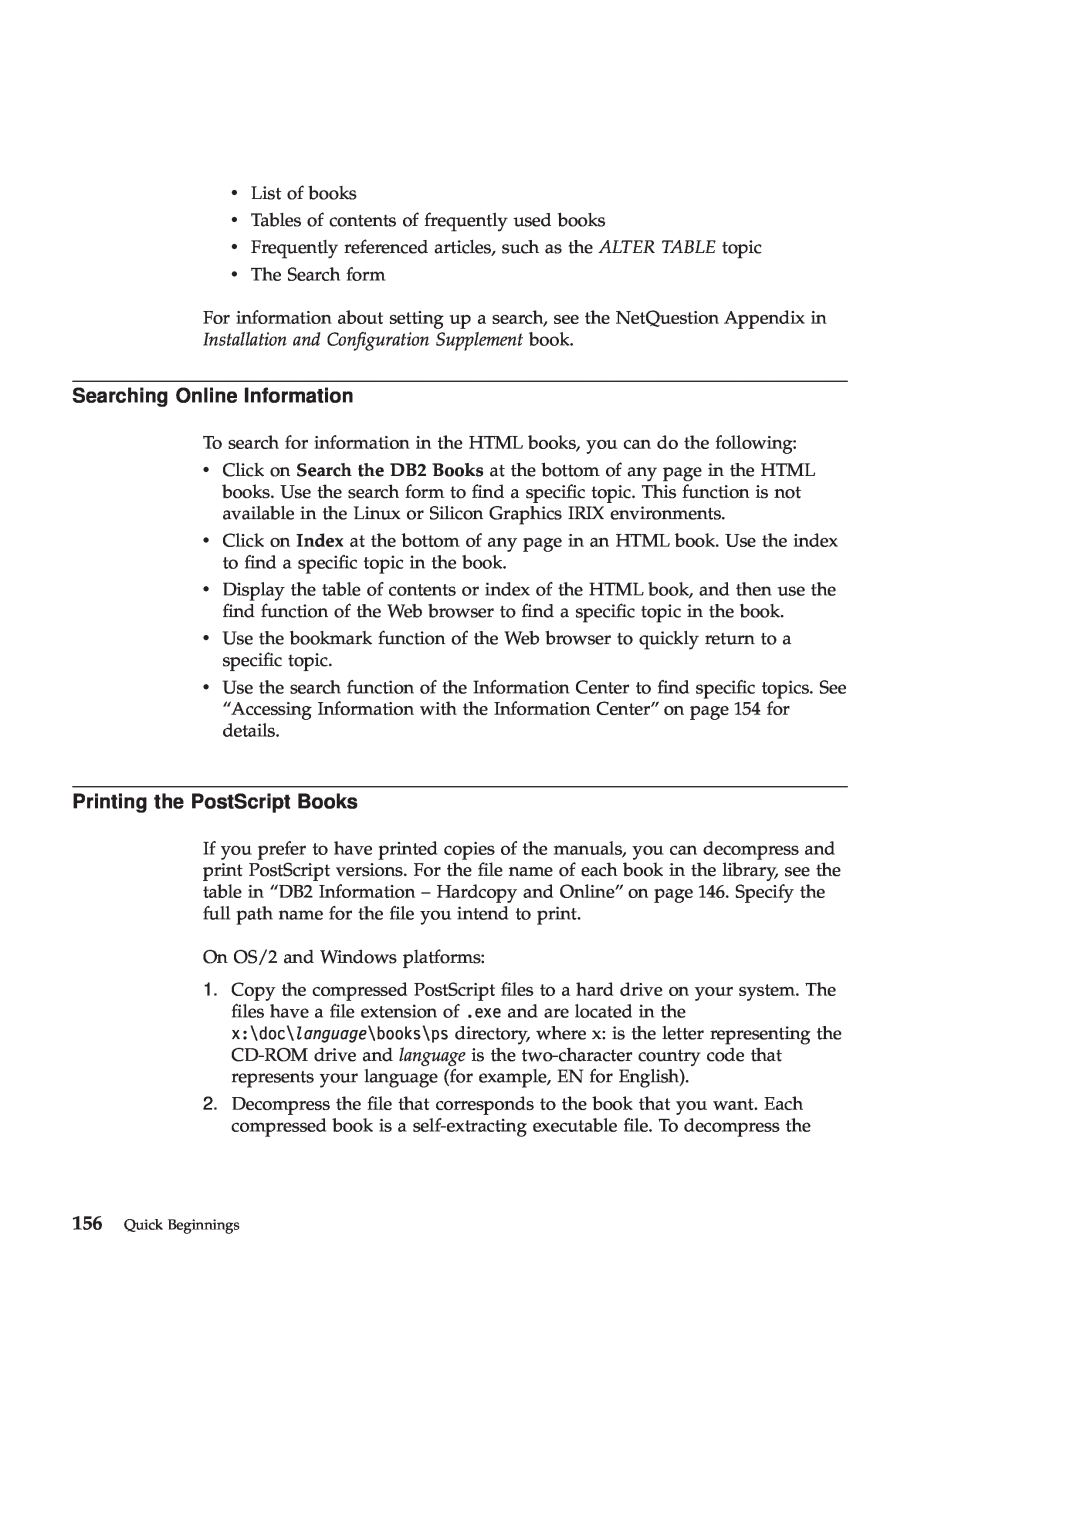 IBM GC09-2830-00 manual Searching Online Information, Printing the PostScript Books 